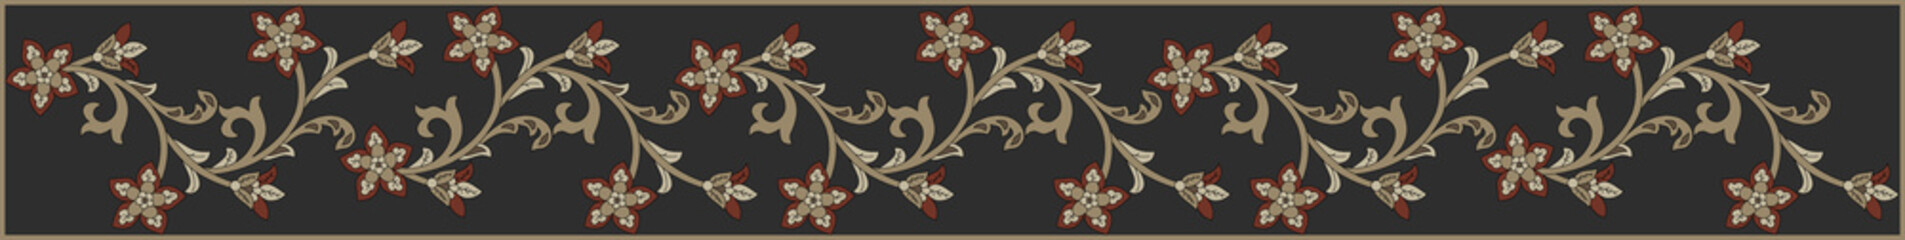 Digital Textile Design, Mughal art flower motif border, digital print on fabric